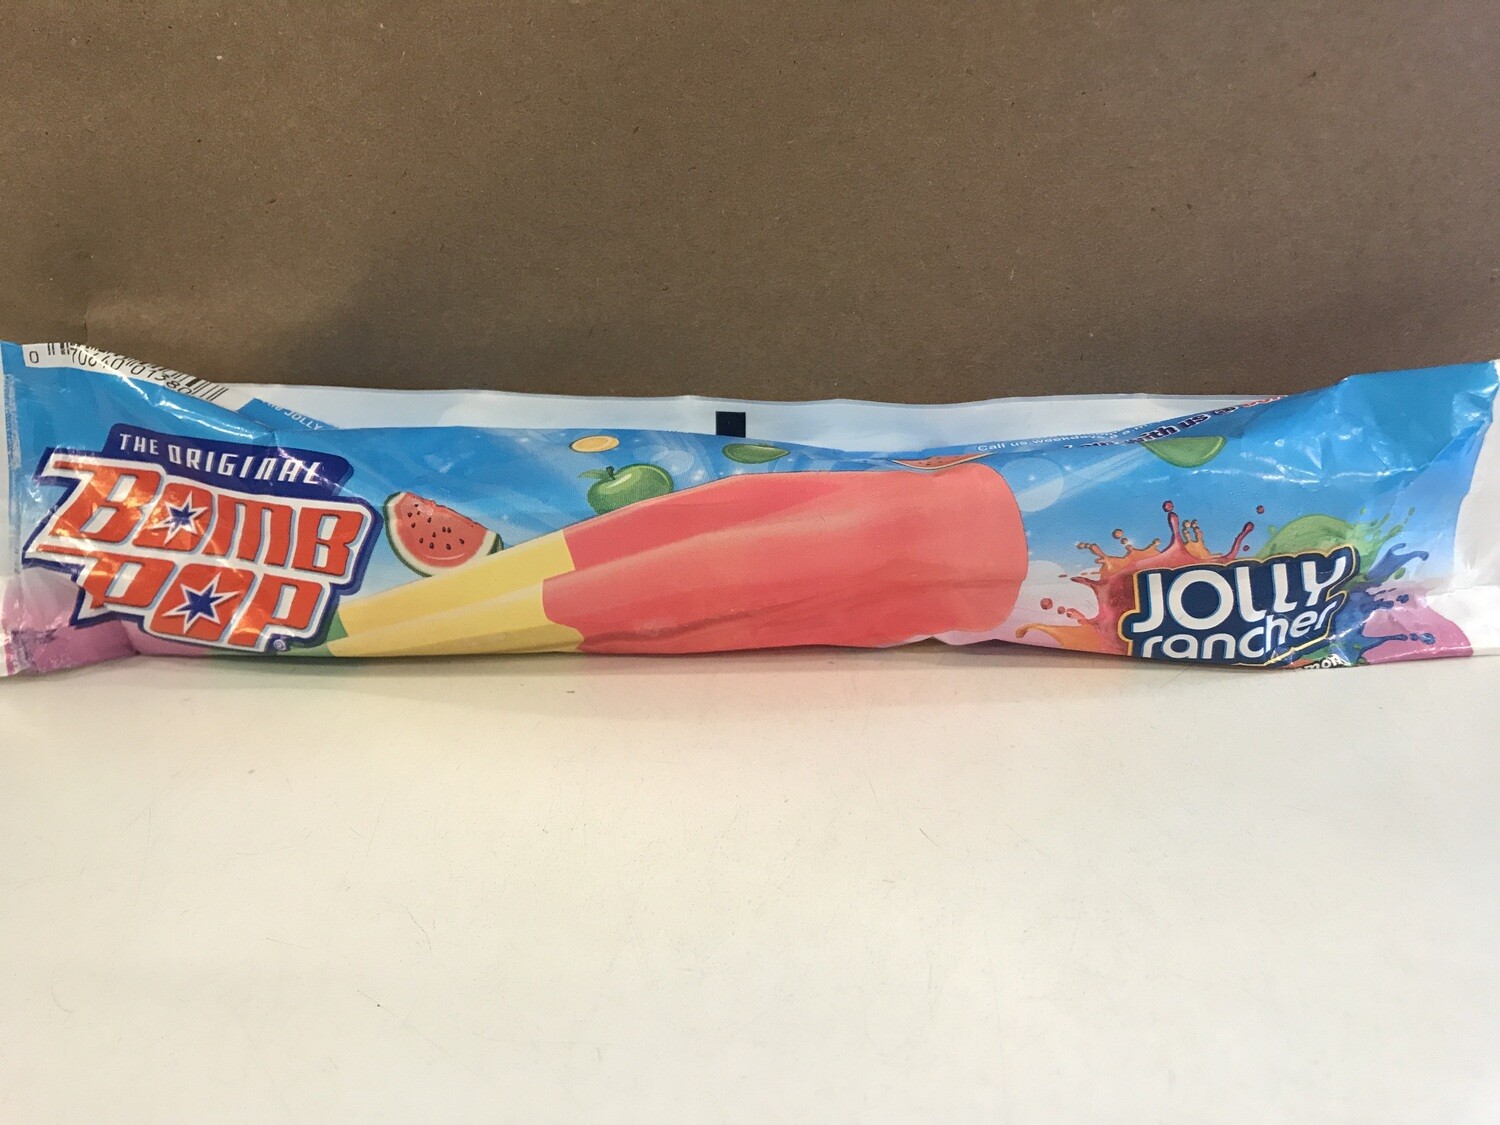 Frozen / Ice Cream Novelty / Jolly Rancher Bomb Pop